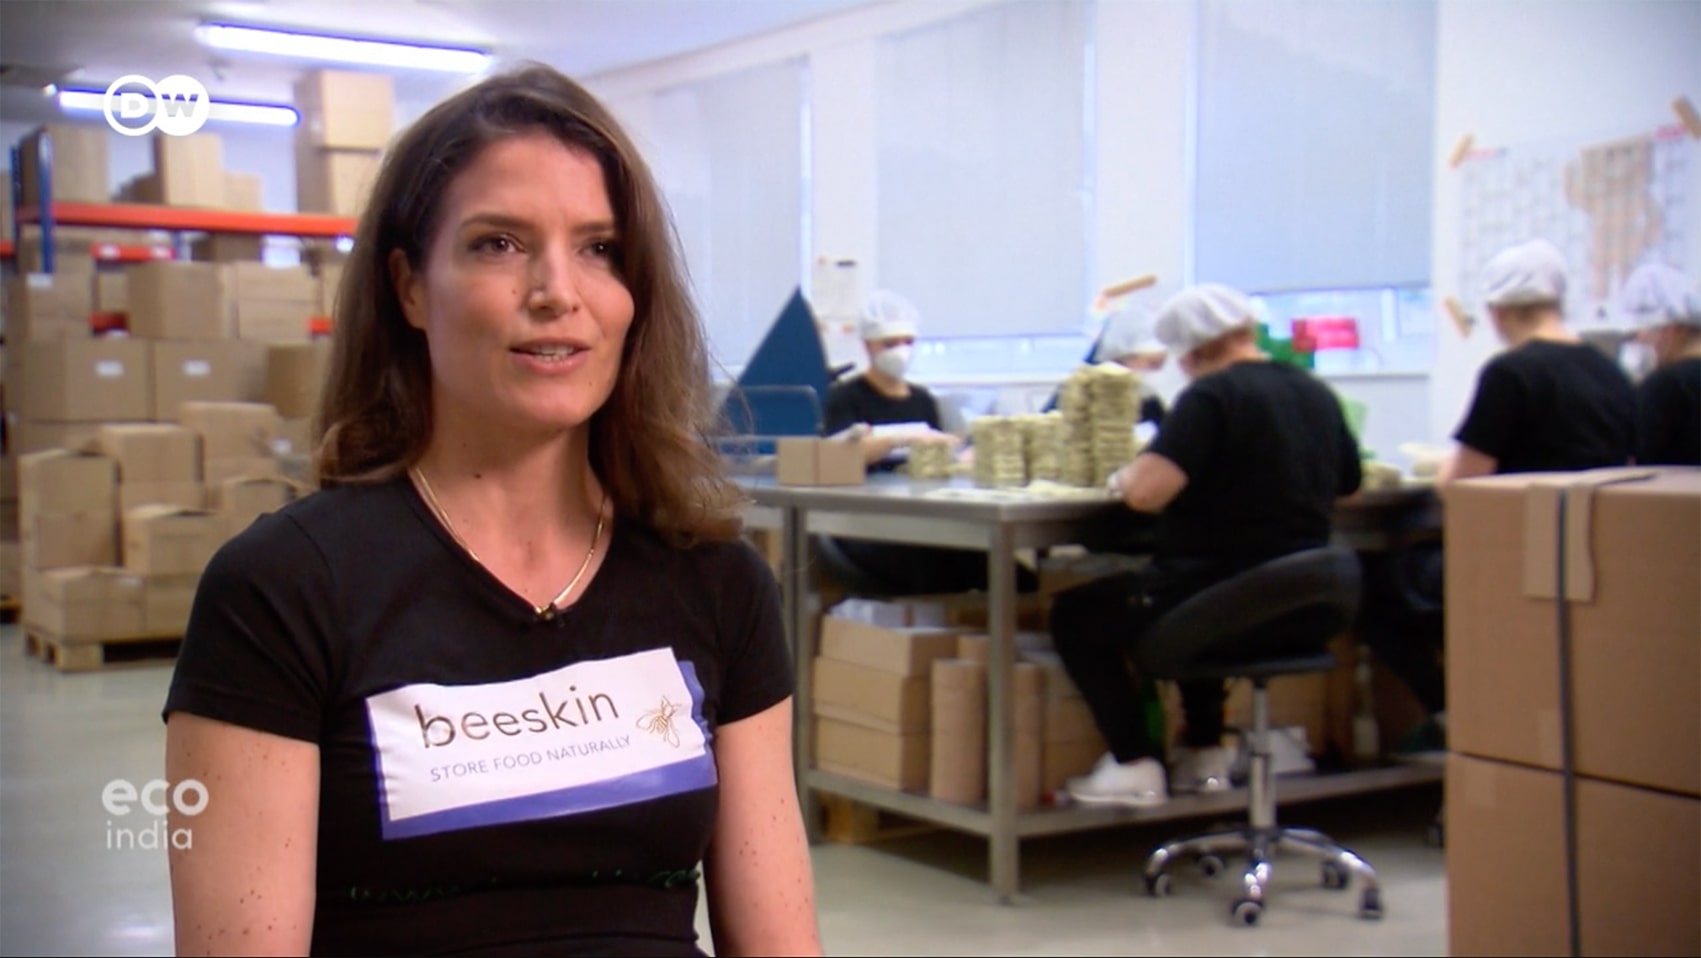 screenshot Deutsche Welle interview showing Tina Sauer and behind production team of beeskin